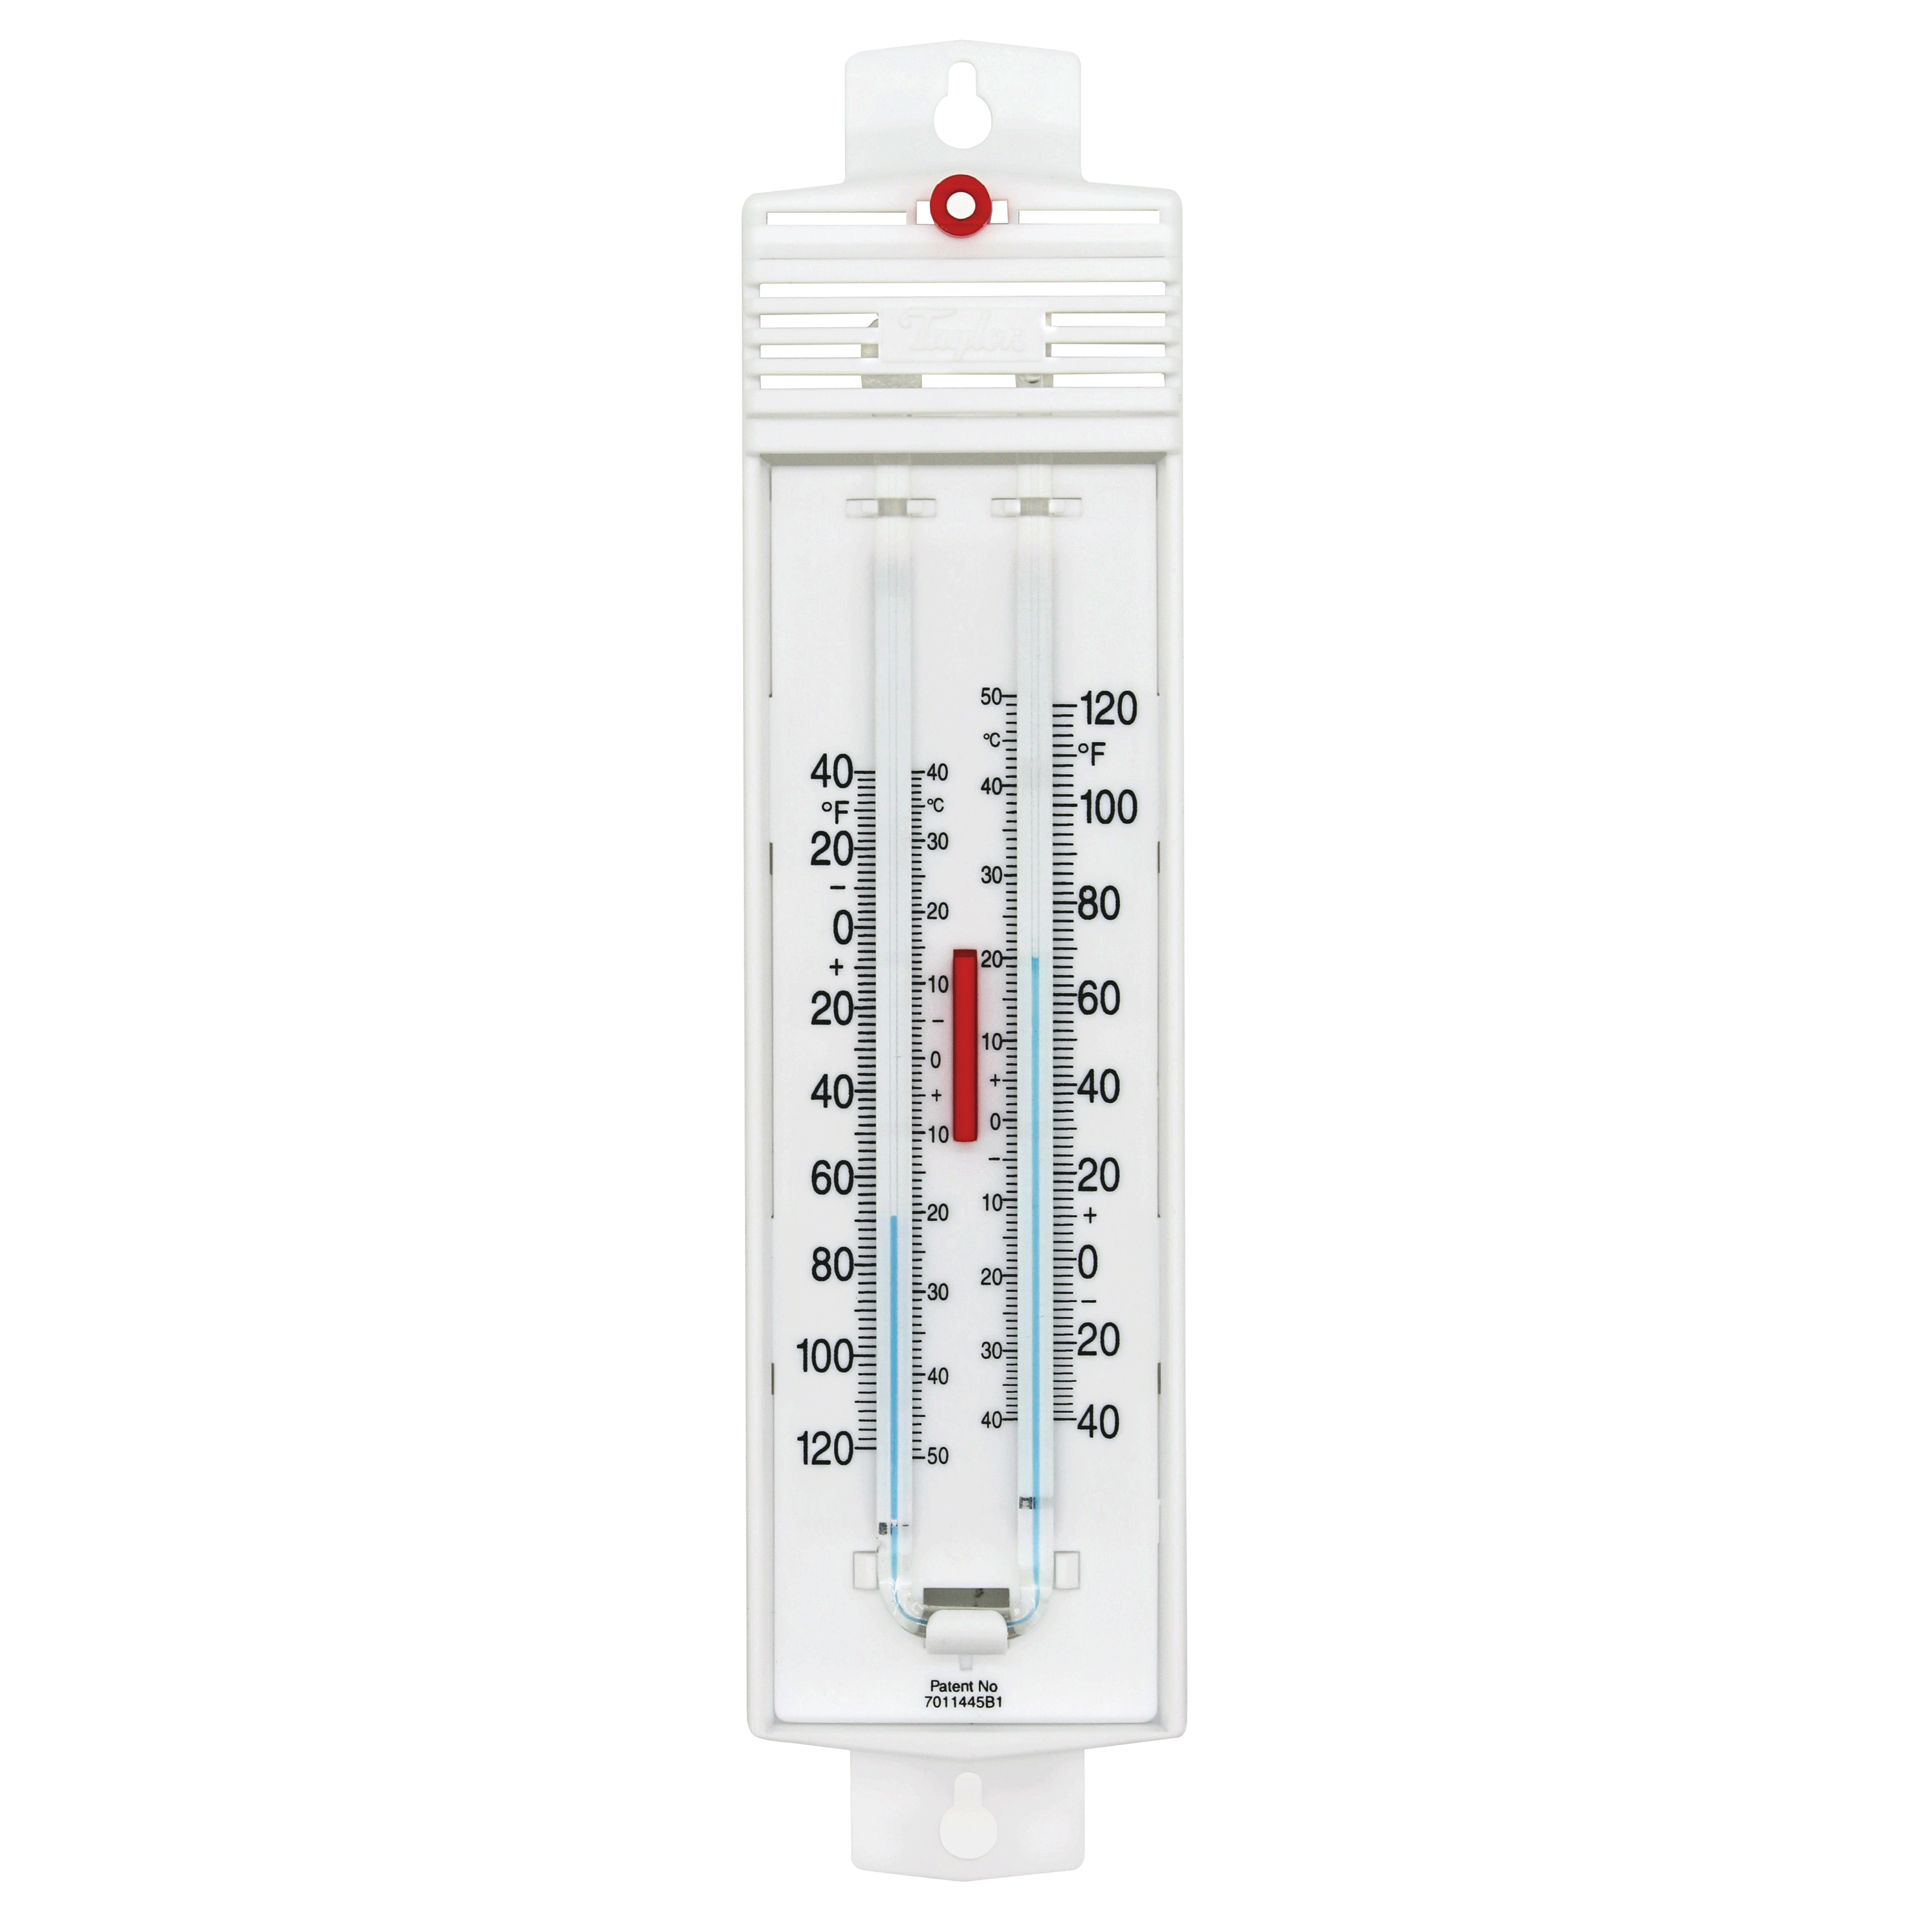 Analog max/min thermometer